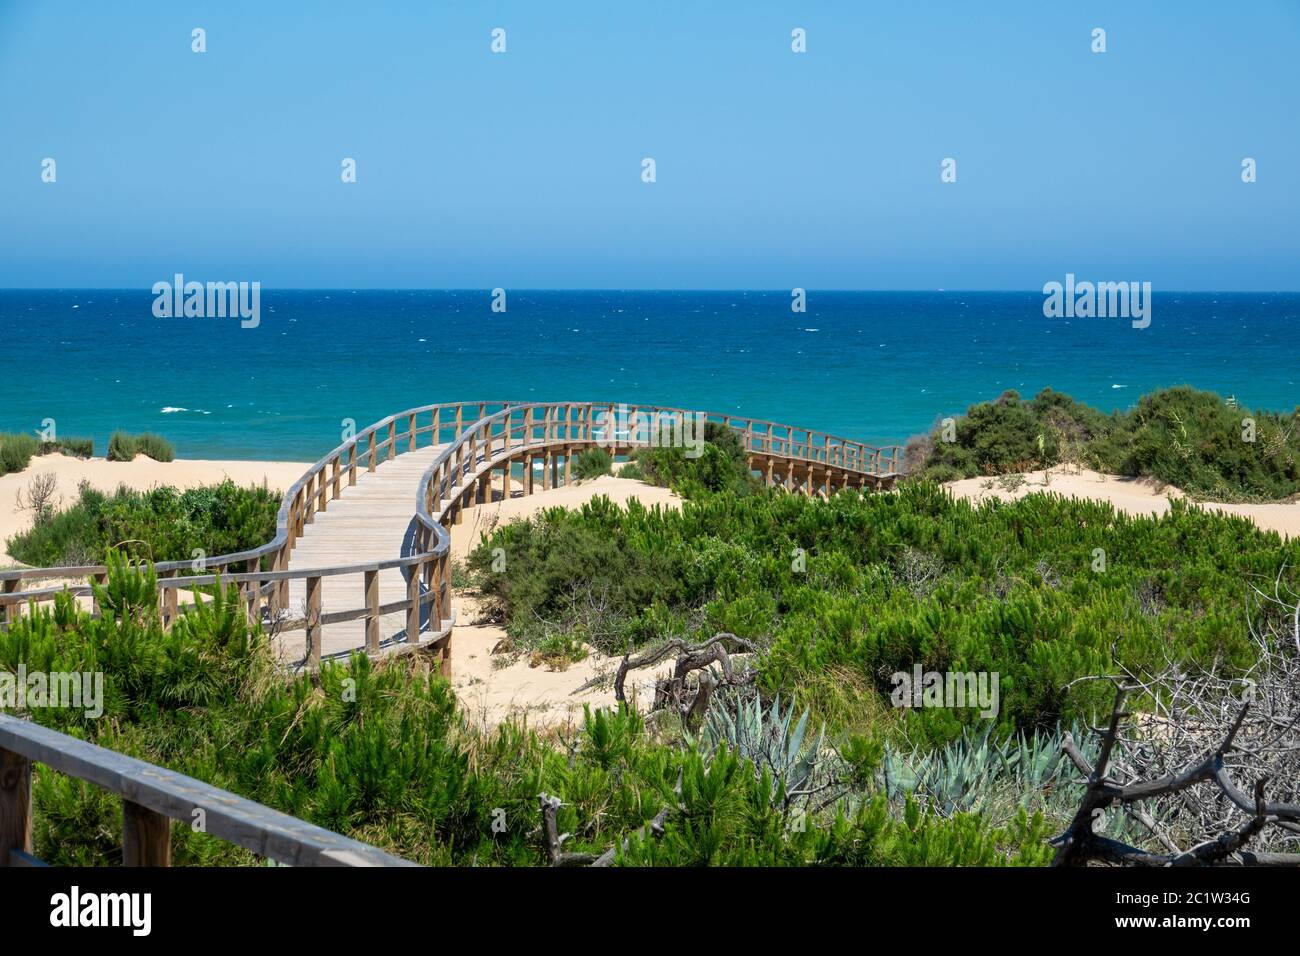 Broadwalk to a sand beach, trees, ocean and blue sky Stock Photo